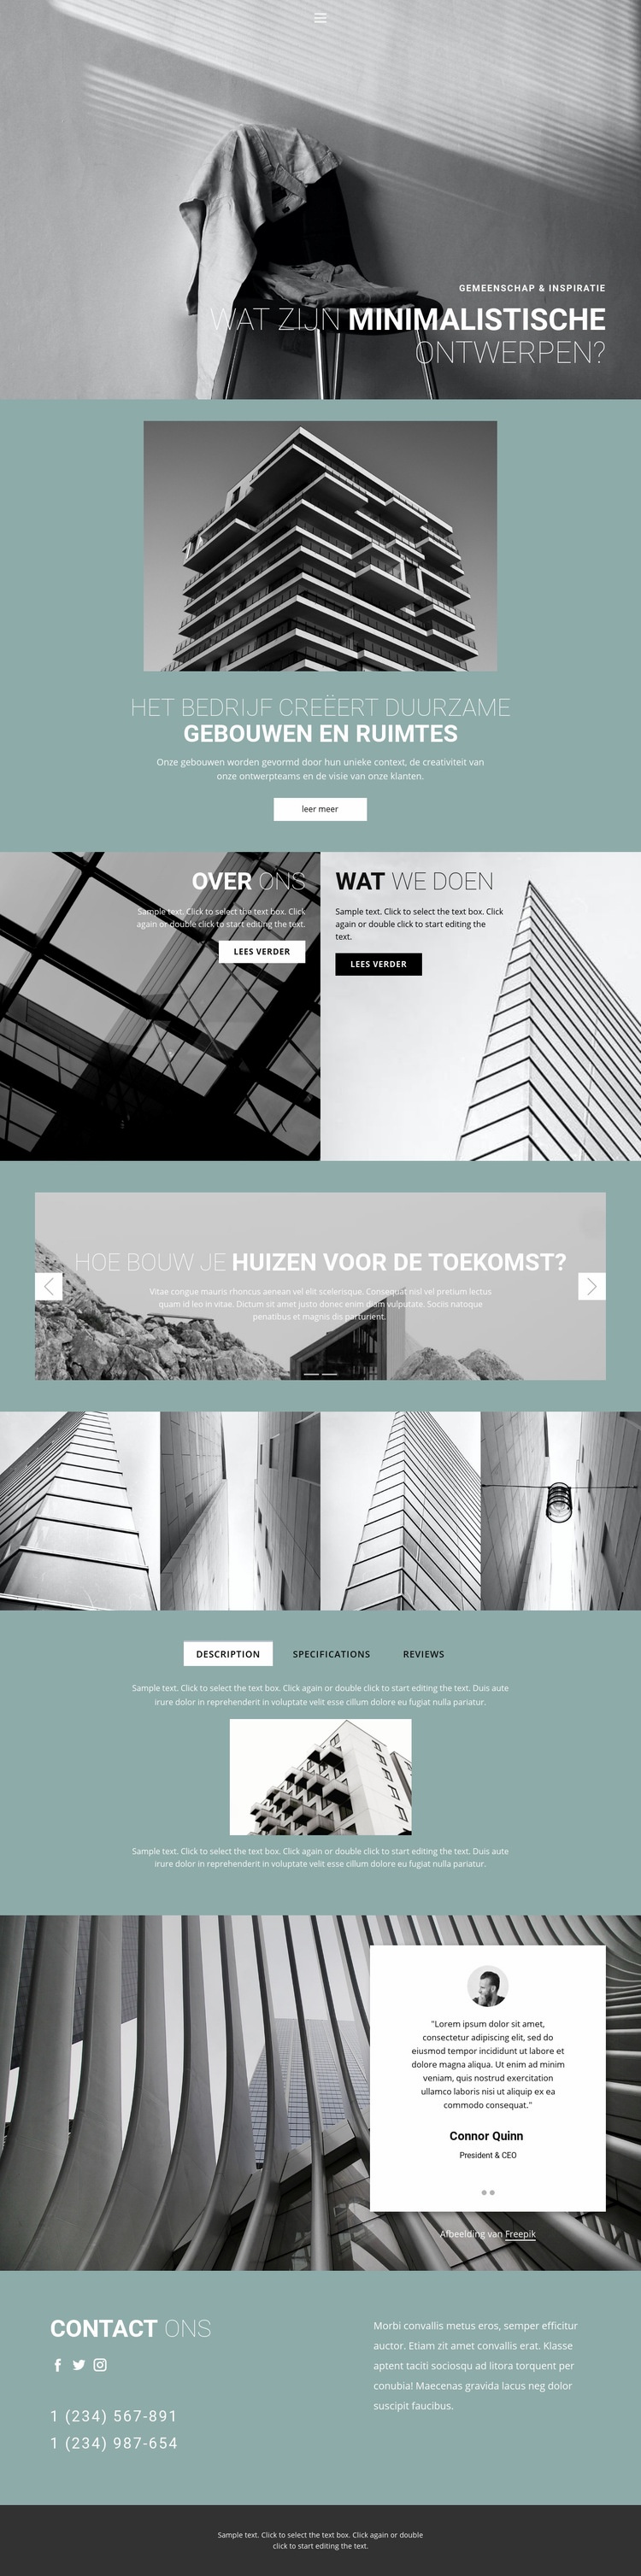 Perfecte architectuurideeën Website mockup